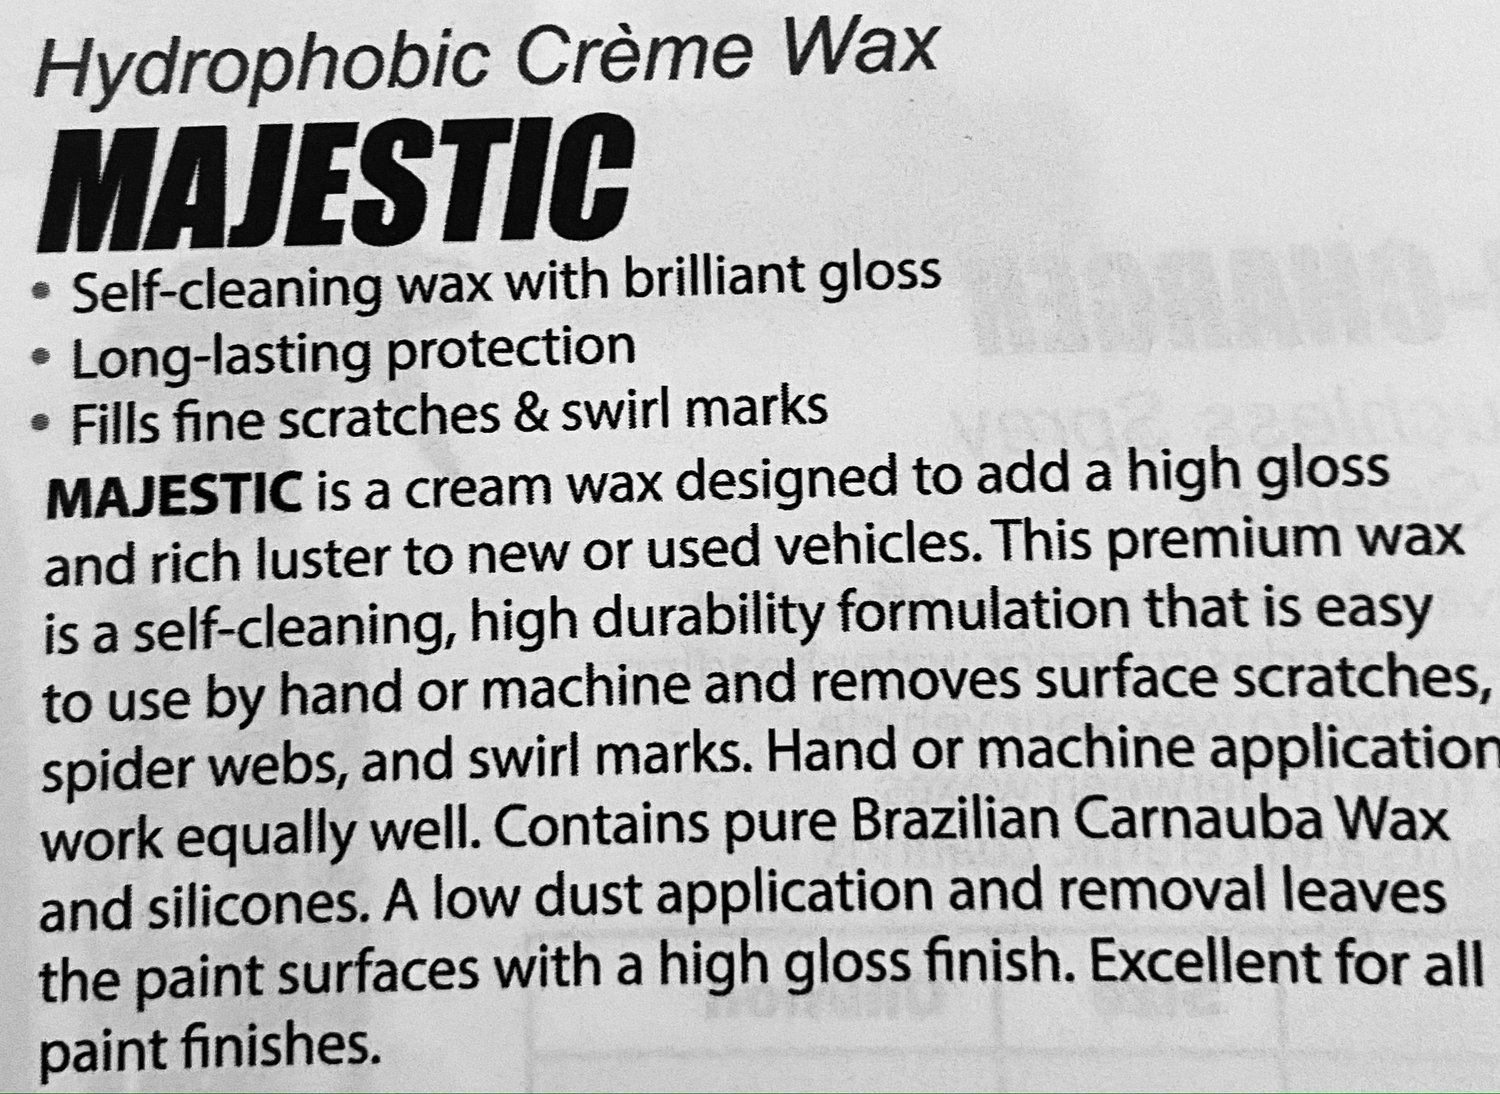 MAJESTIC Hydrophobic Creme Wax